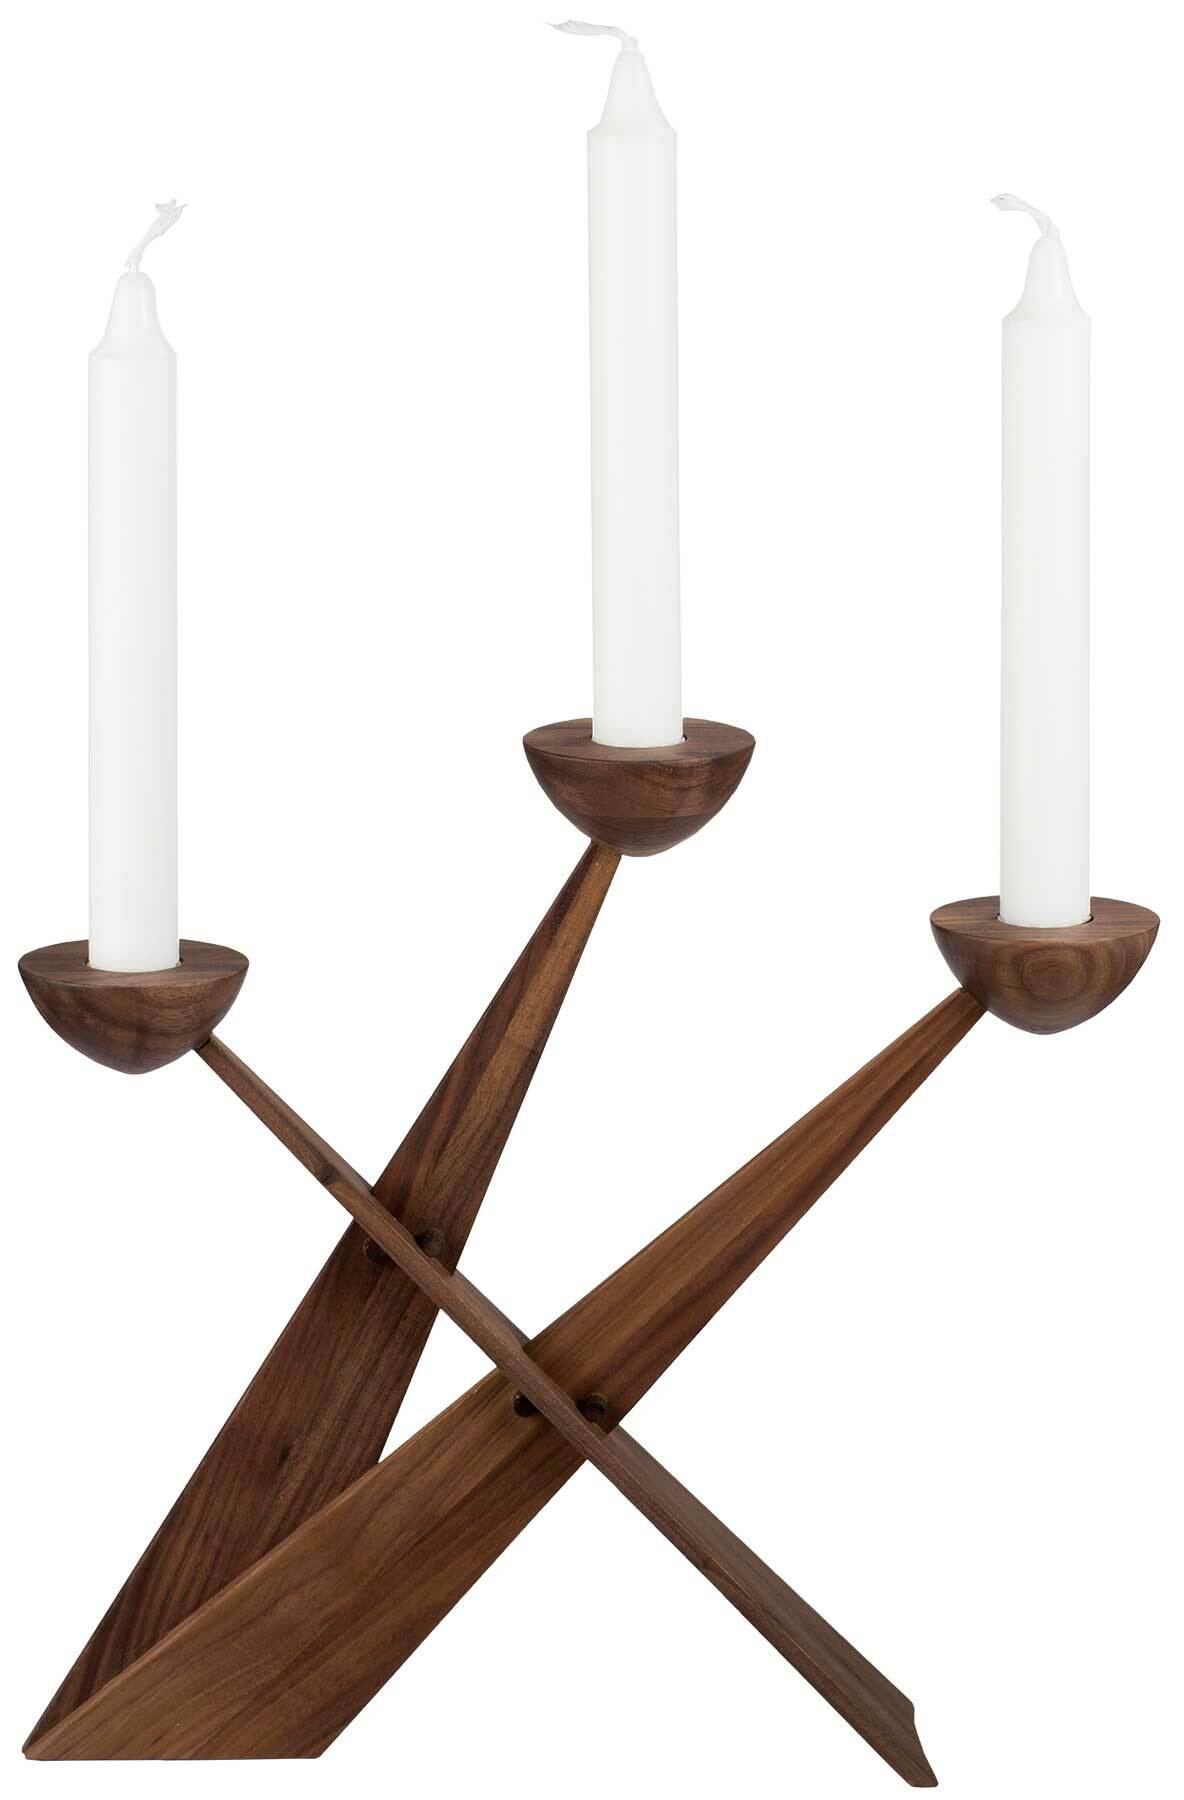 Chandelier "Candletree" (sans bougies), version en bois de noyer von Spring Copenhagen